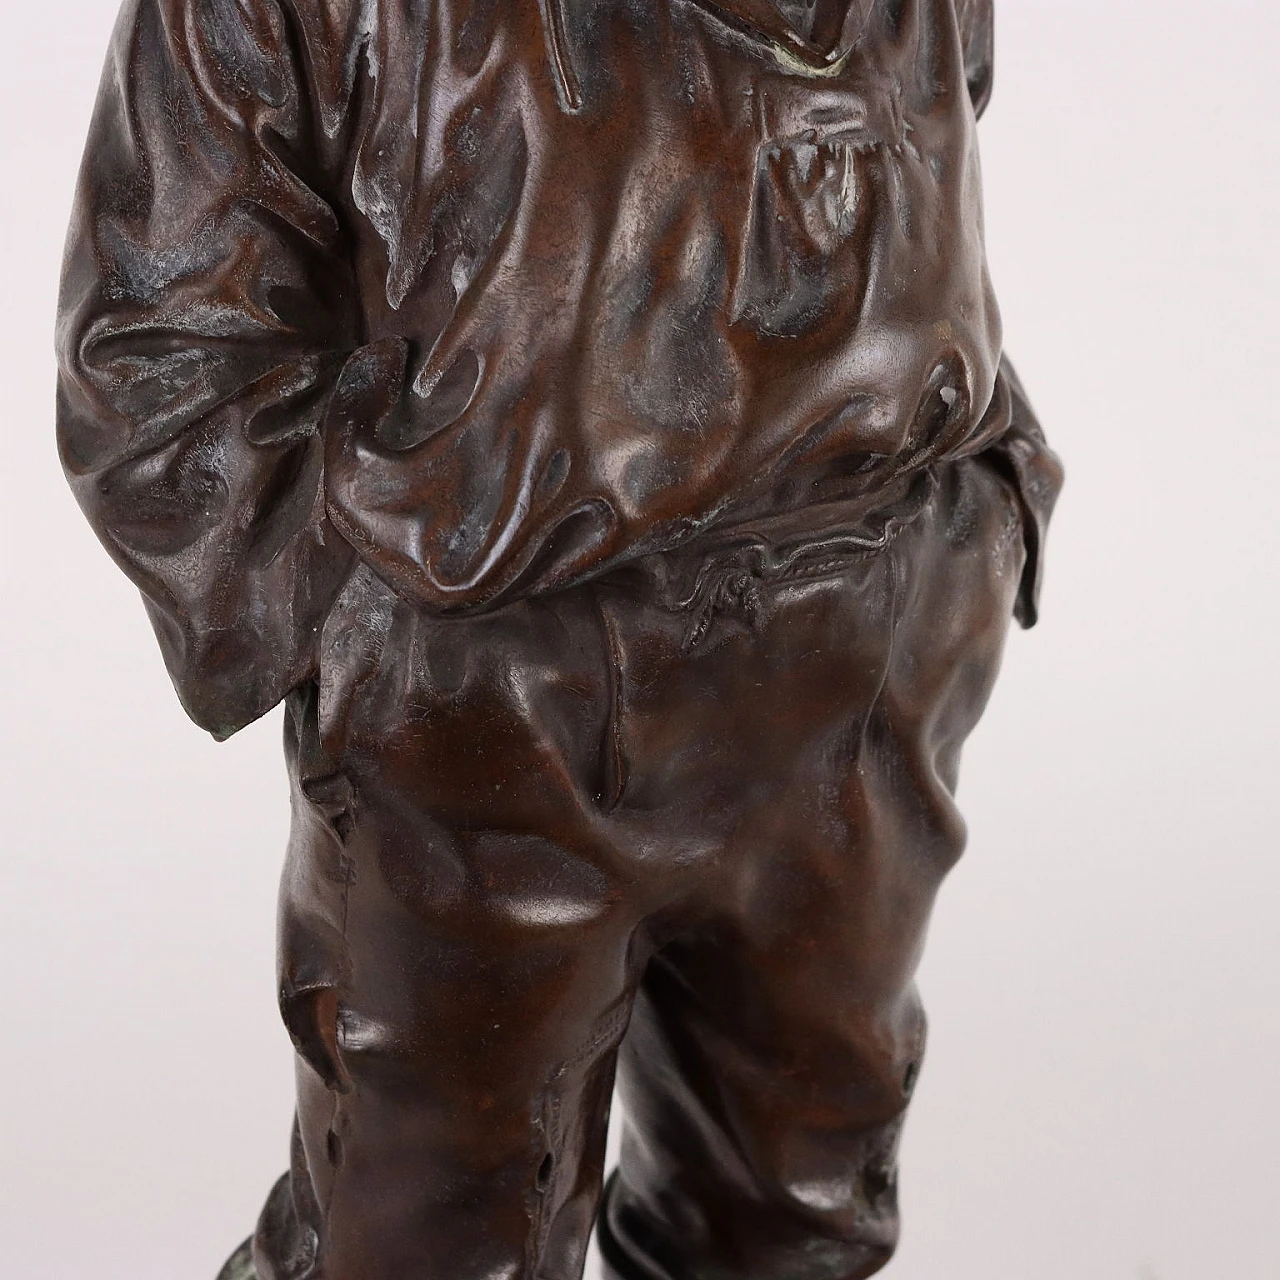 Whistling boy, bronze sculpture on marble base 6